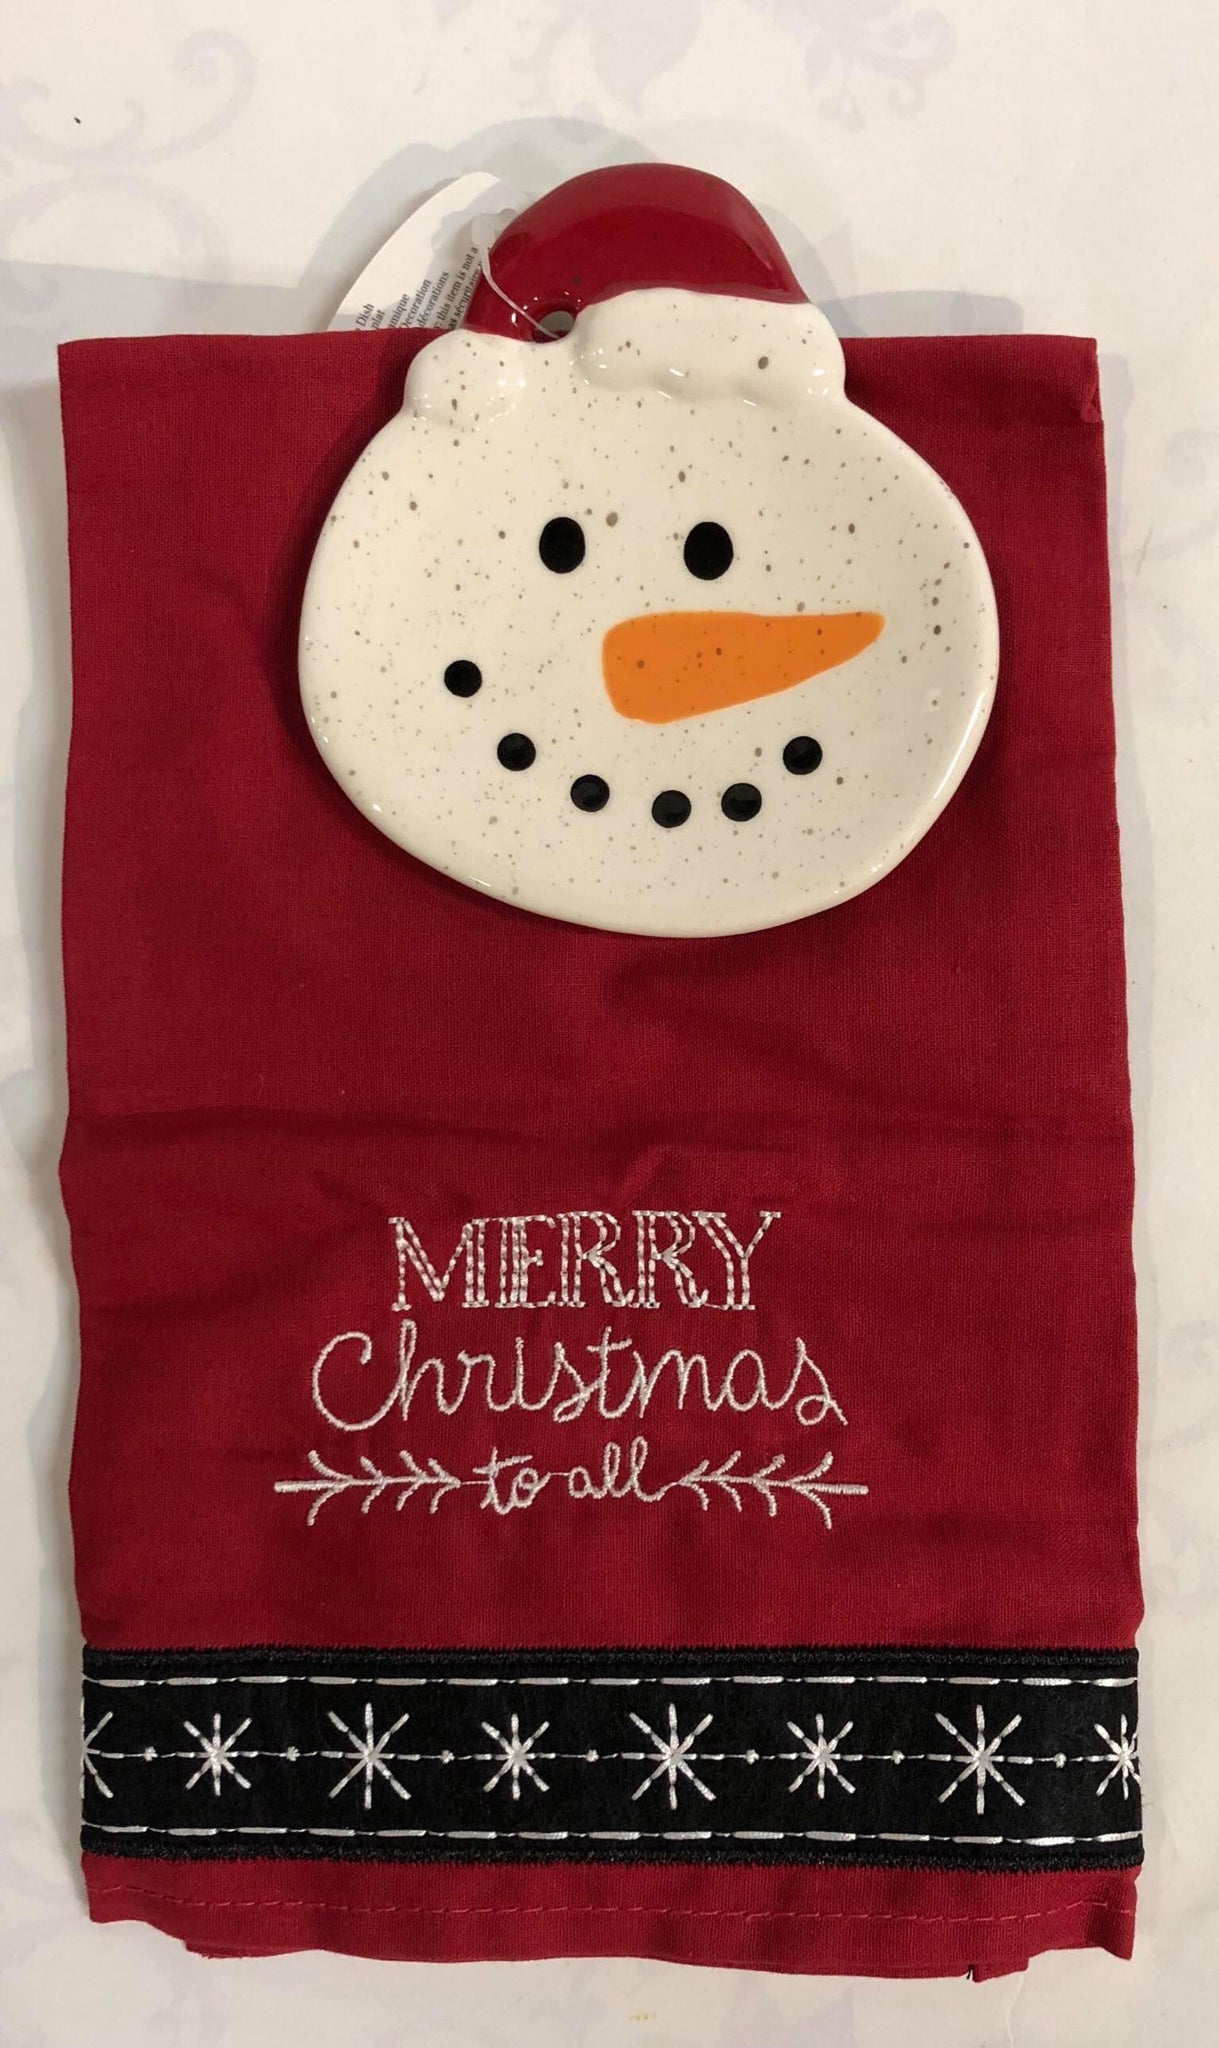 Snowman tea towel with soap dish- Santa hat